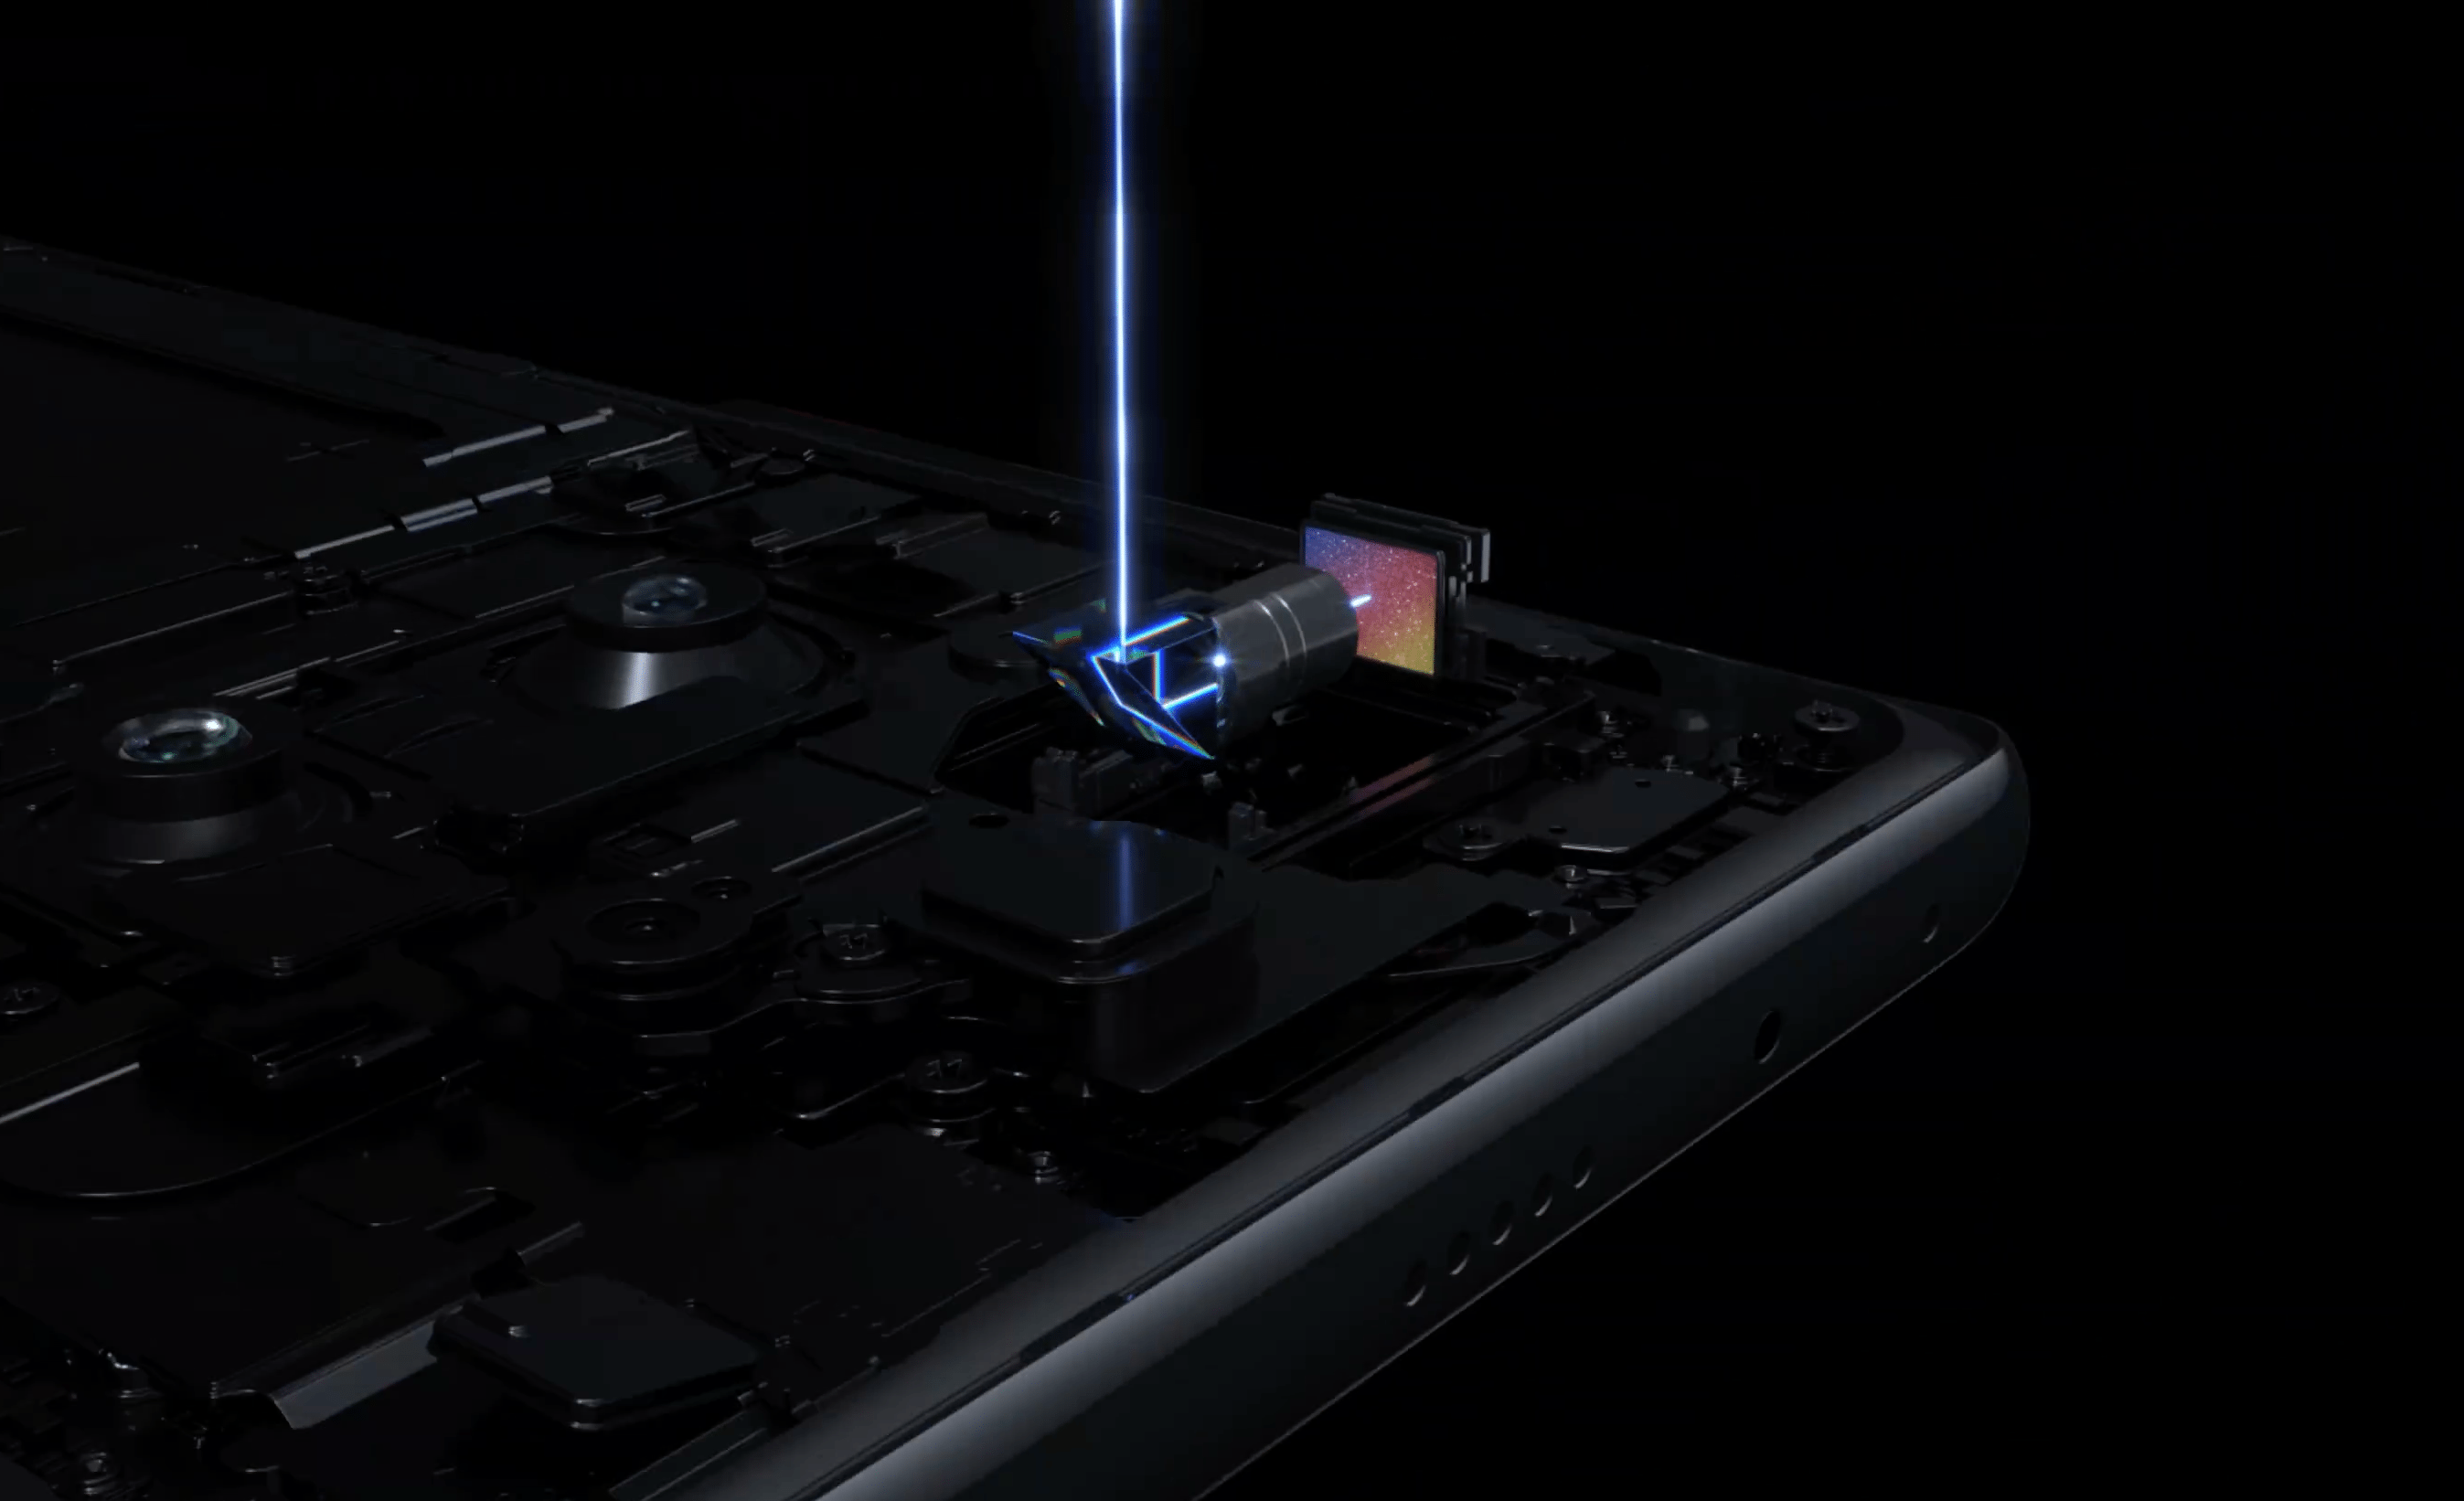 荣耀MagicX折叠屏曝新料；苹果MagSafe外接电池解锁新技能